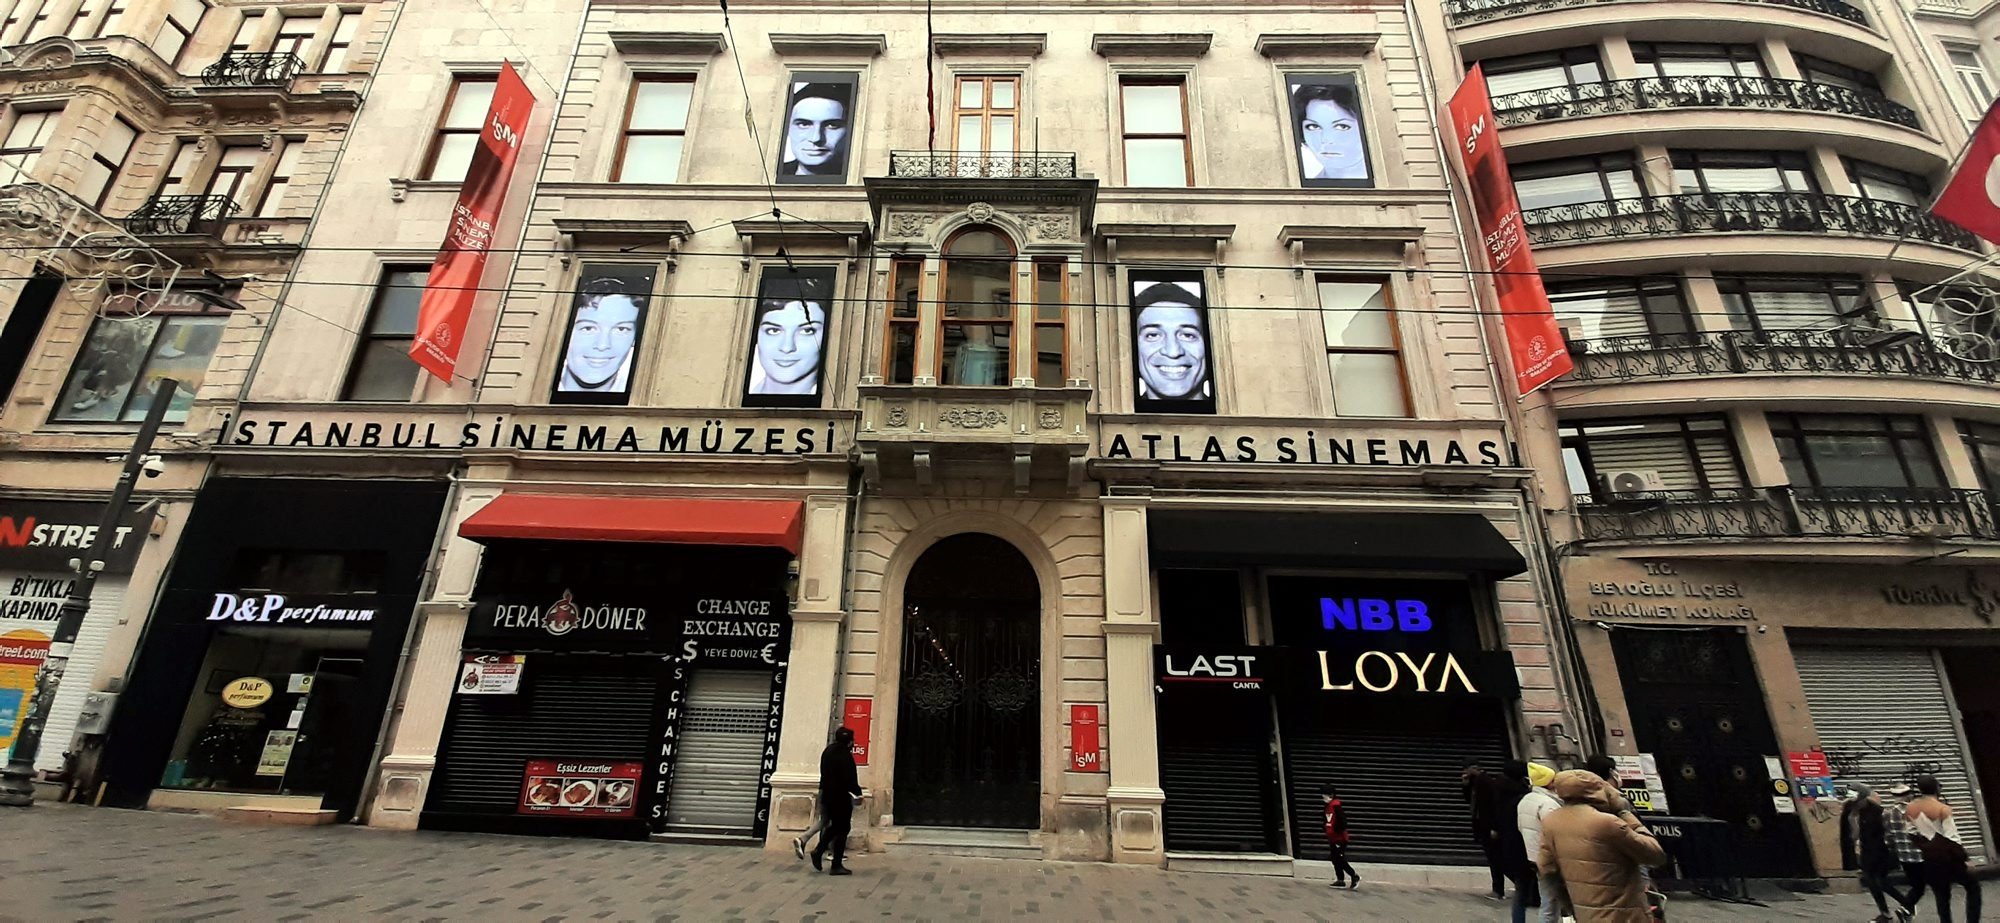 The Istanbul Cinema Museum, Istanbul, Turkey, Jan. 2, 2021. (Photo by Mustafa Kaya)